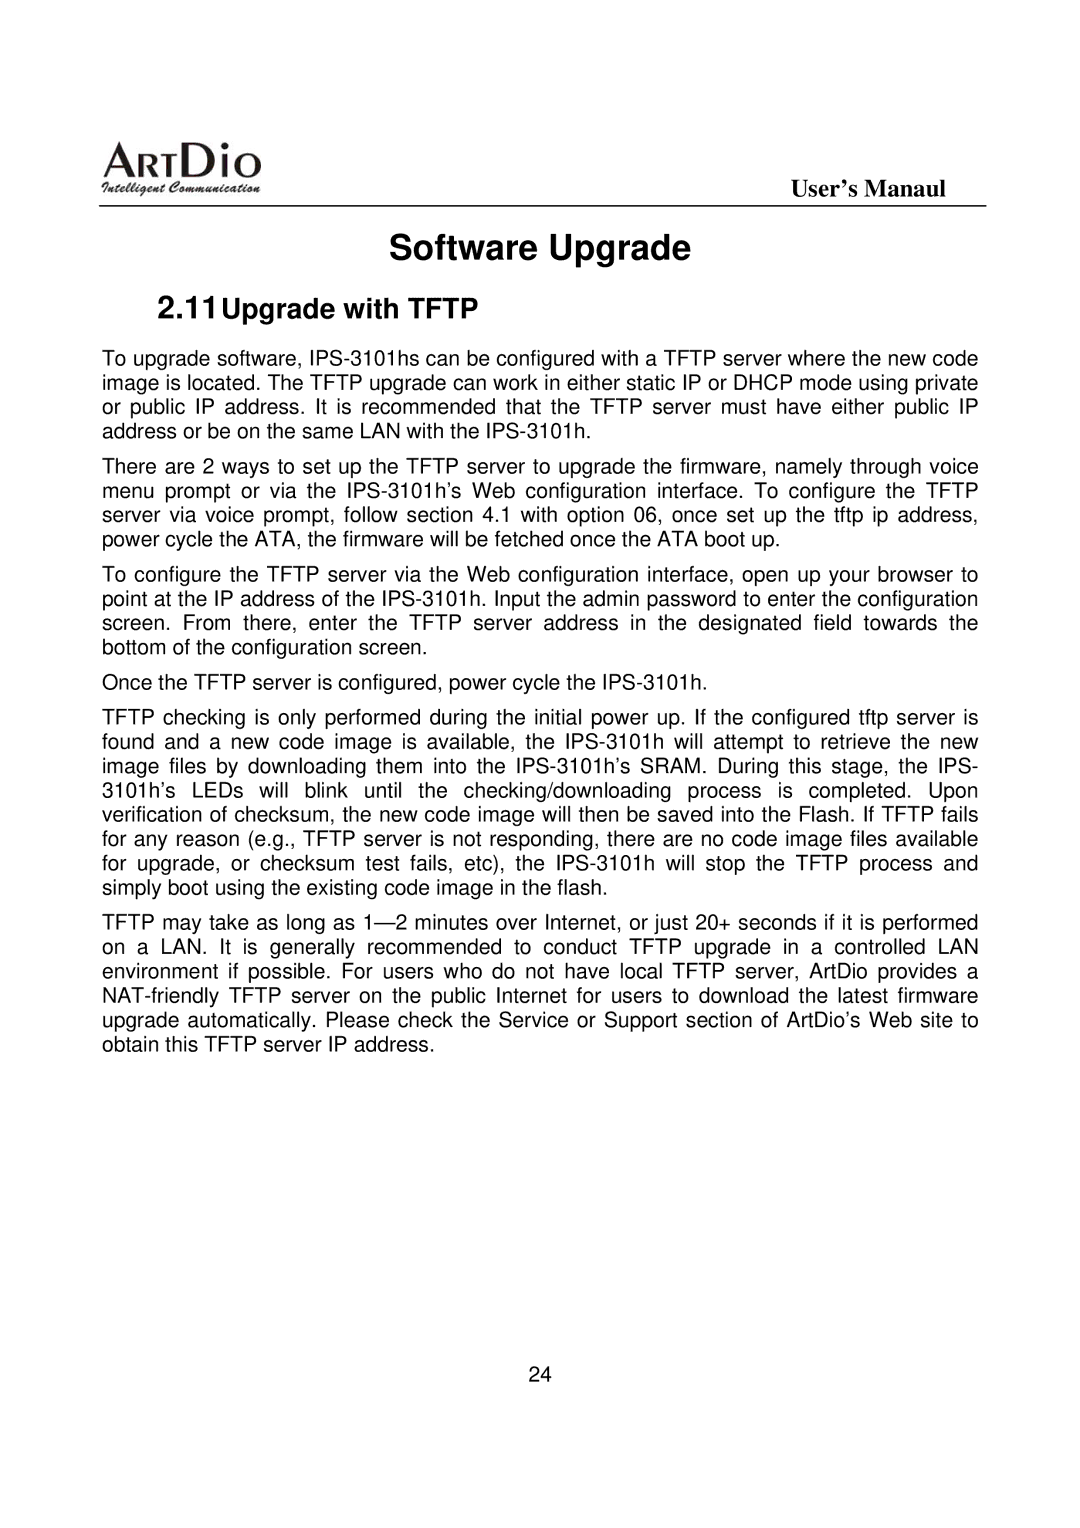 ArtDio IPS-3101h user manual Software Upgrade, Upgrade with Tftp 